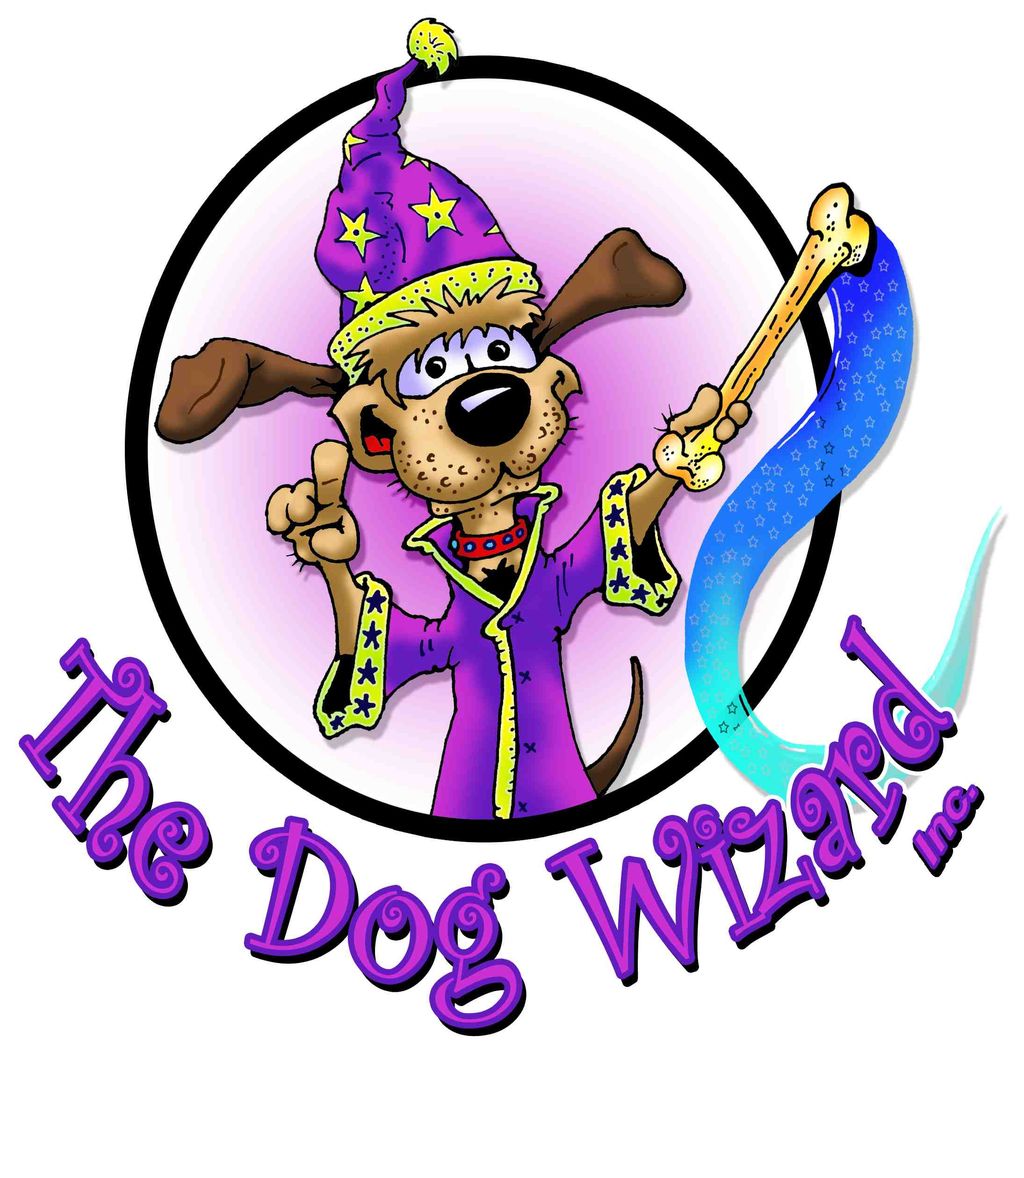 Charleston Dog Wizard